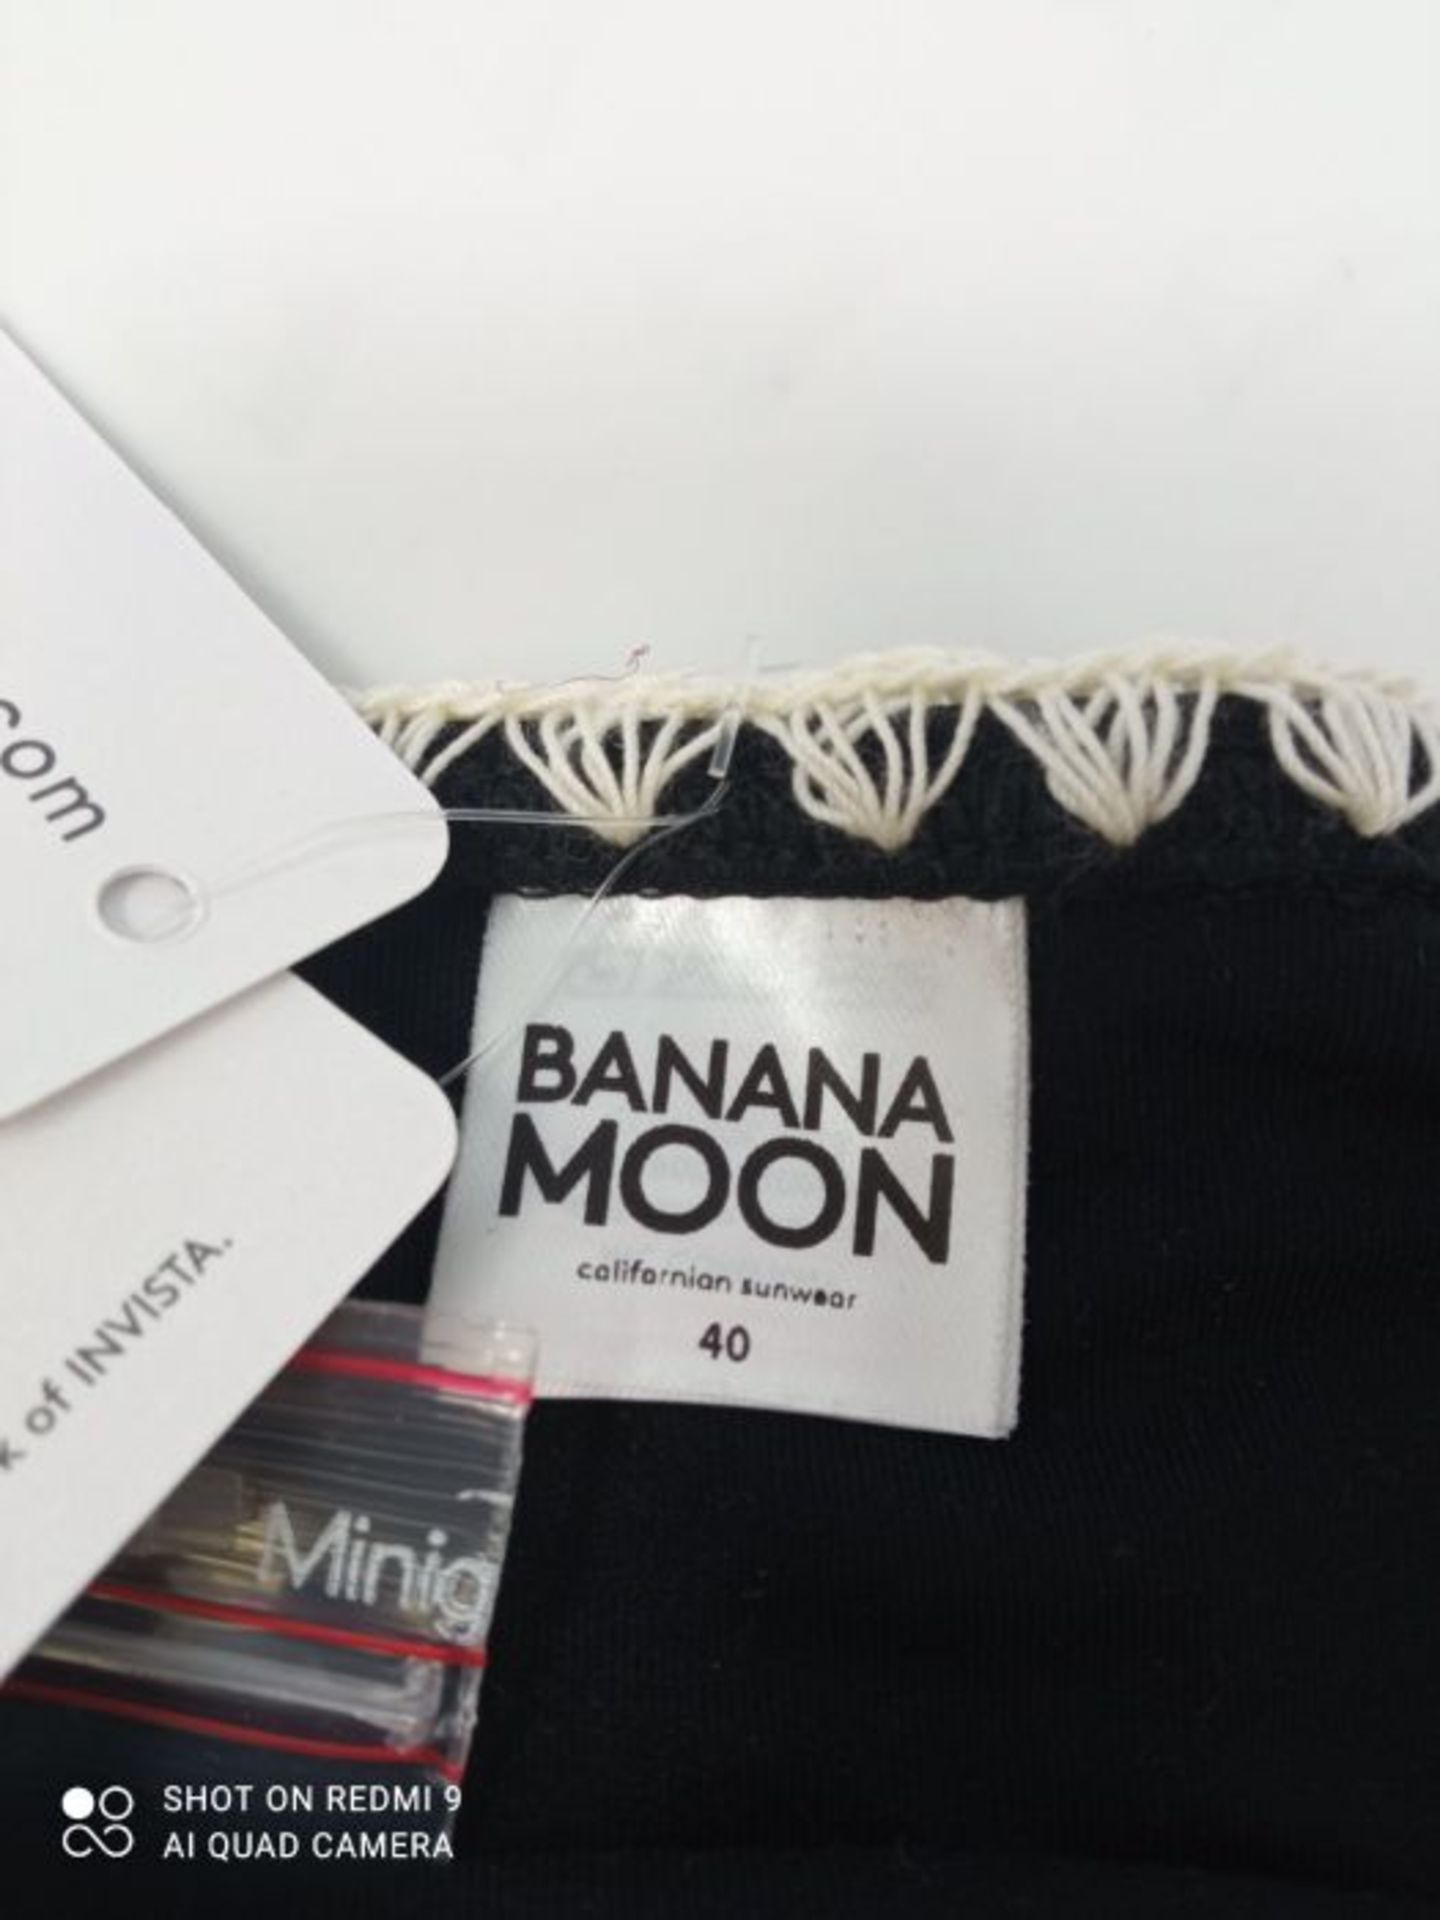 Banana Moon Women's AVORA ETHNICHIC Bikini Bottoms, Black (Noir Scandola/Lux), 10 - Image 3 of 3